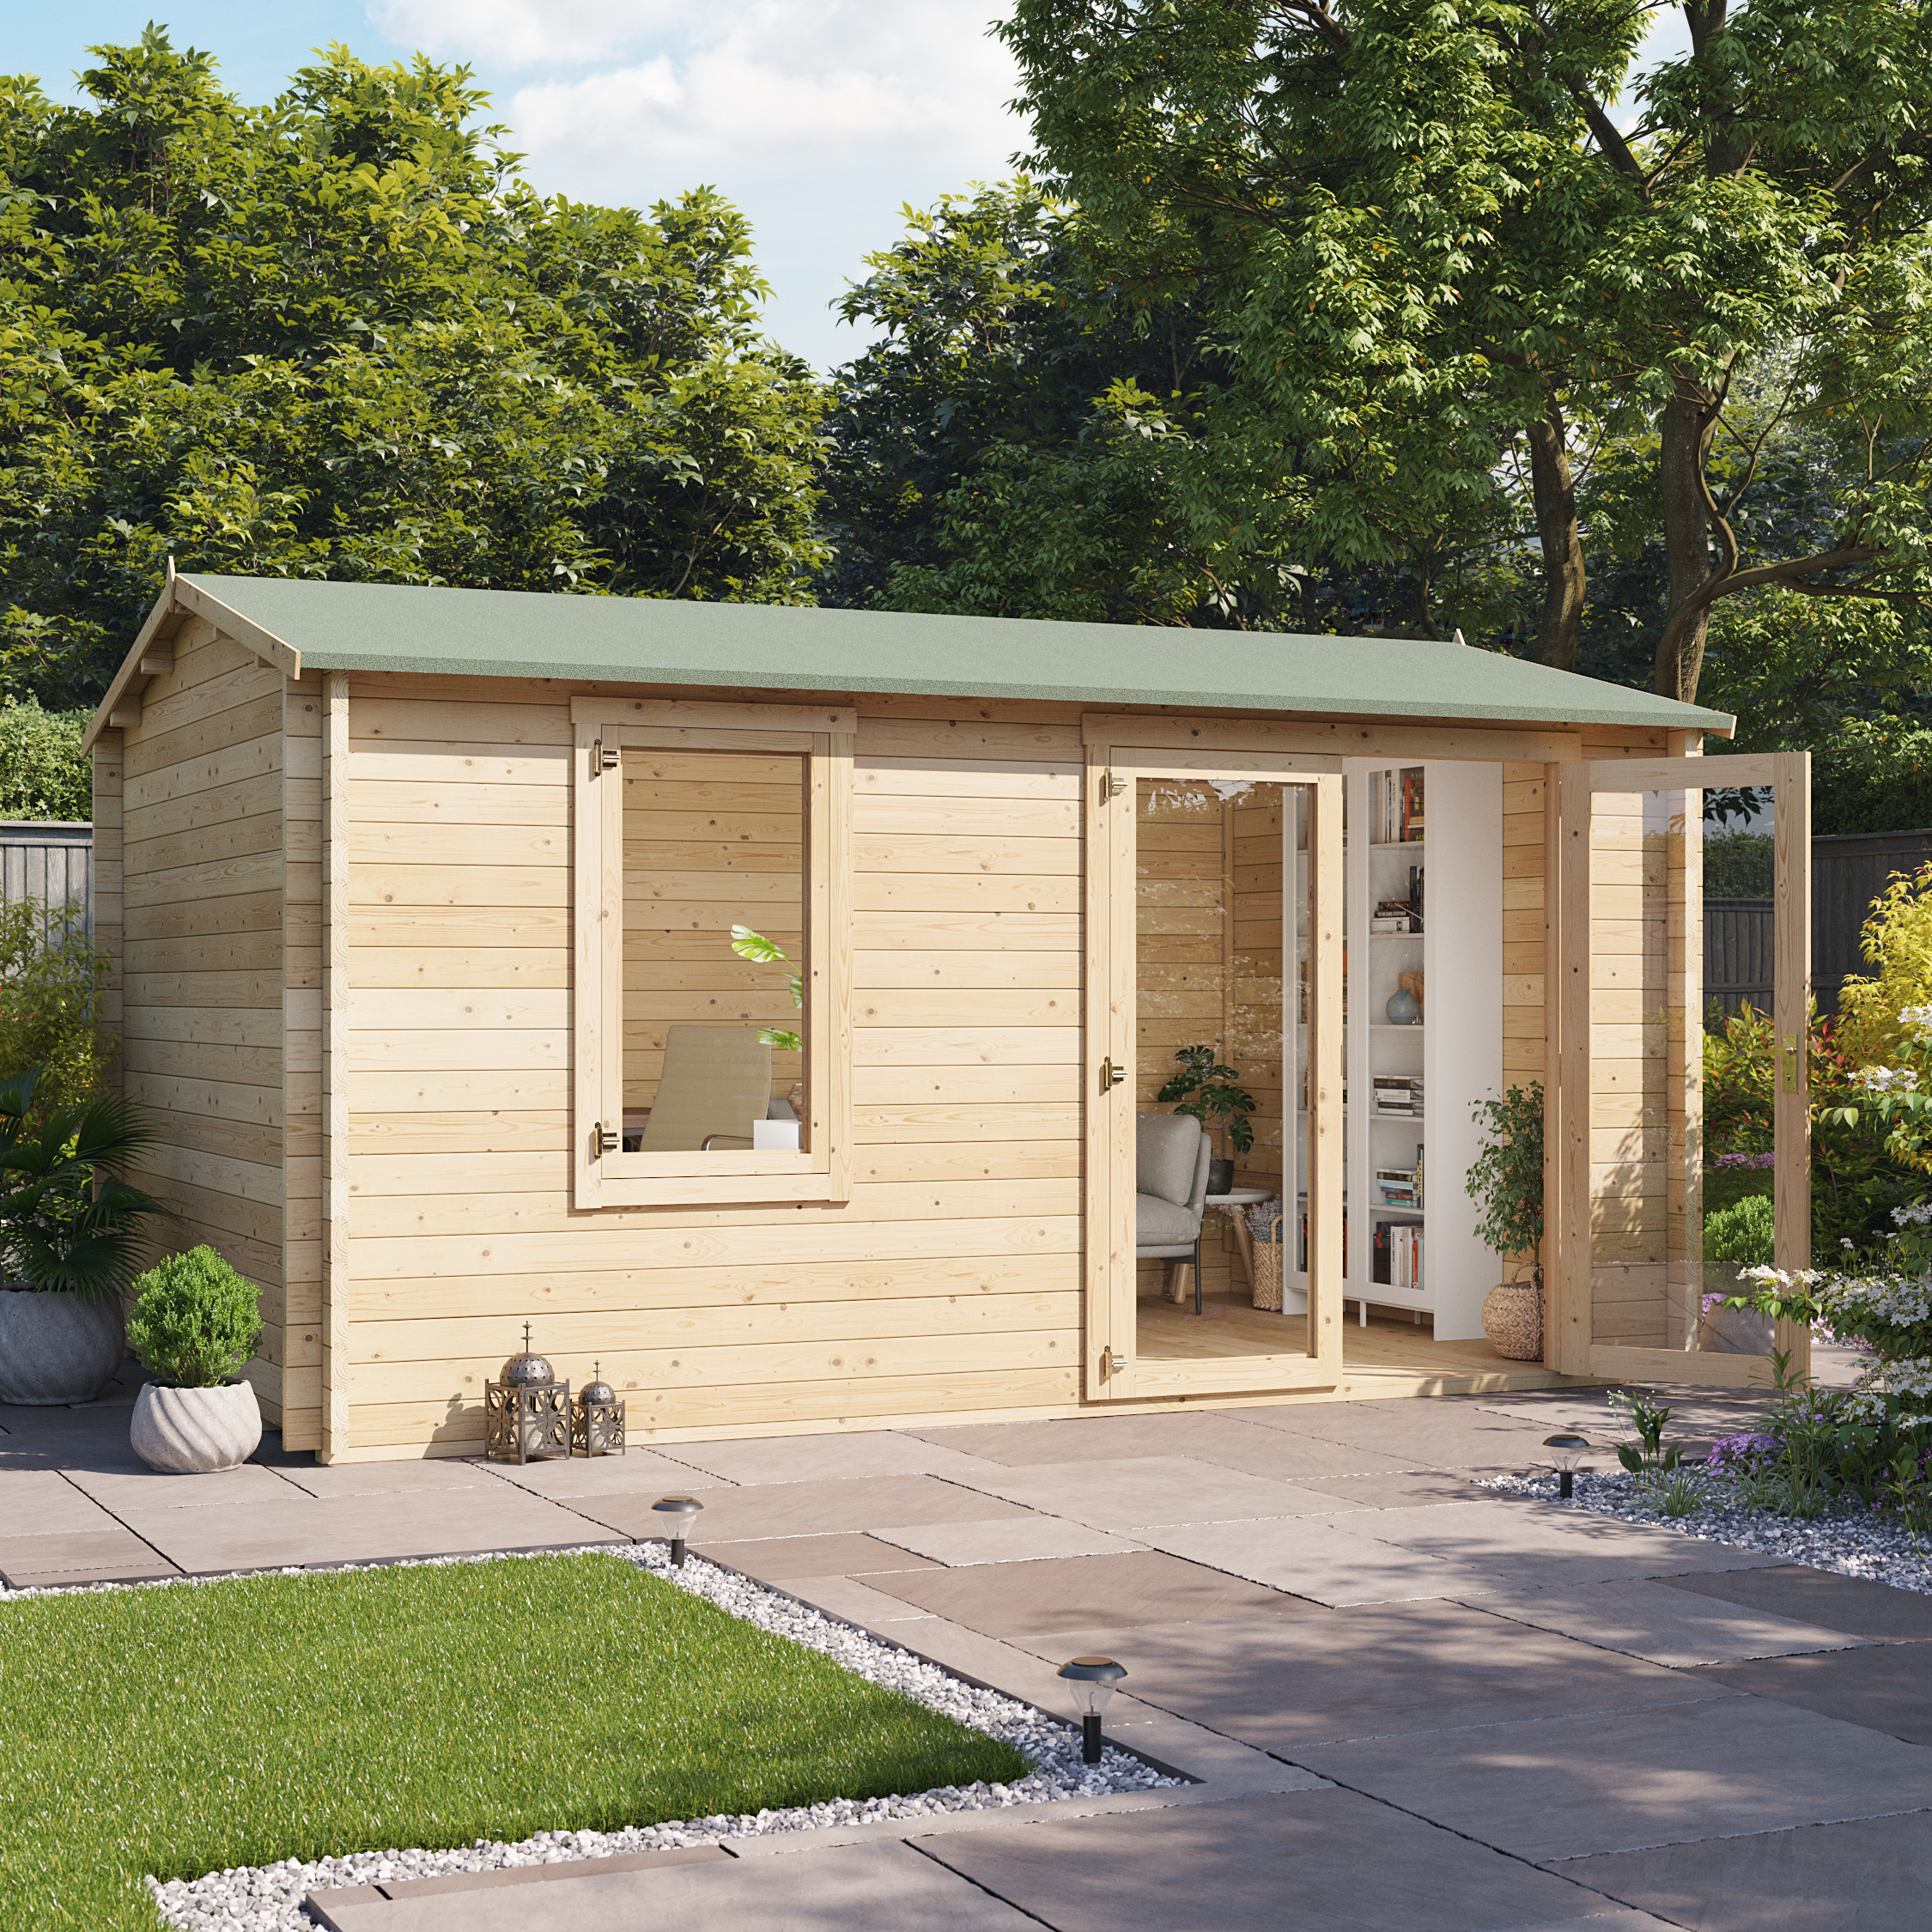 4.5m x 3.0m Log Cabin - BillyOh Devon Log Cabin - 44mm Tongue & Groove Wooden Garden Building